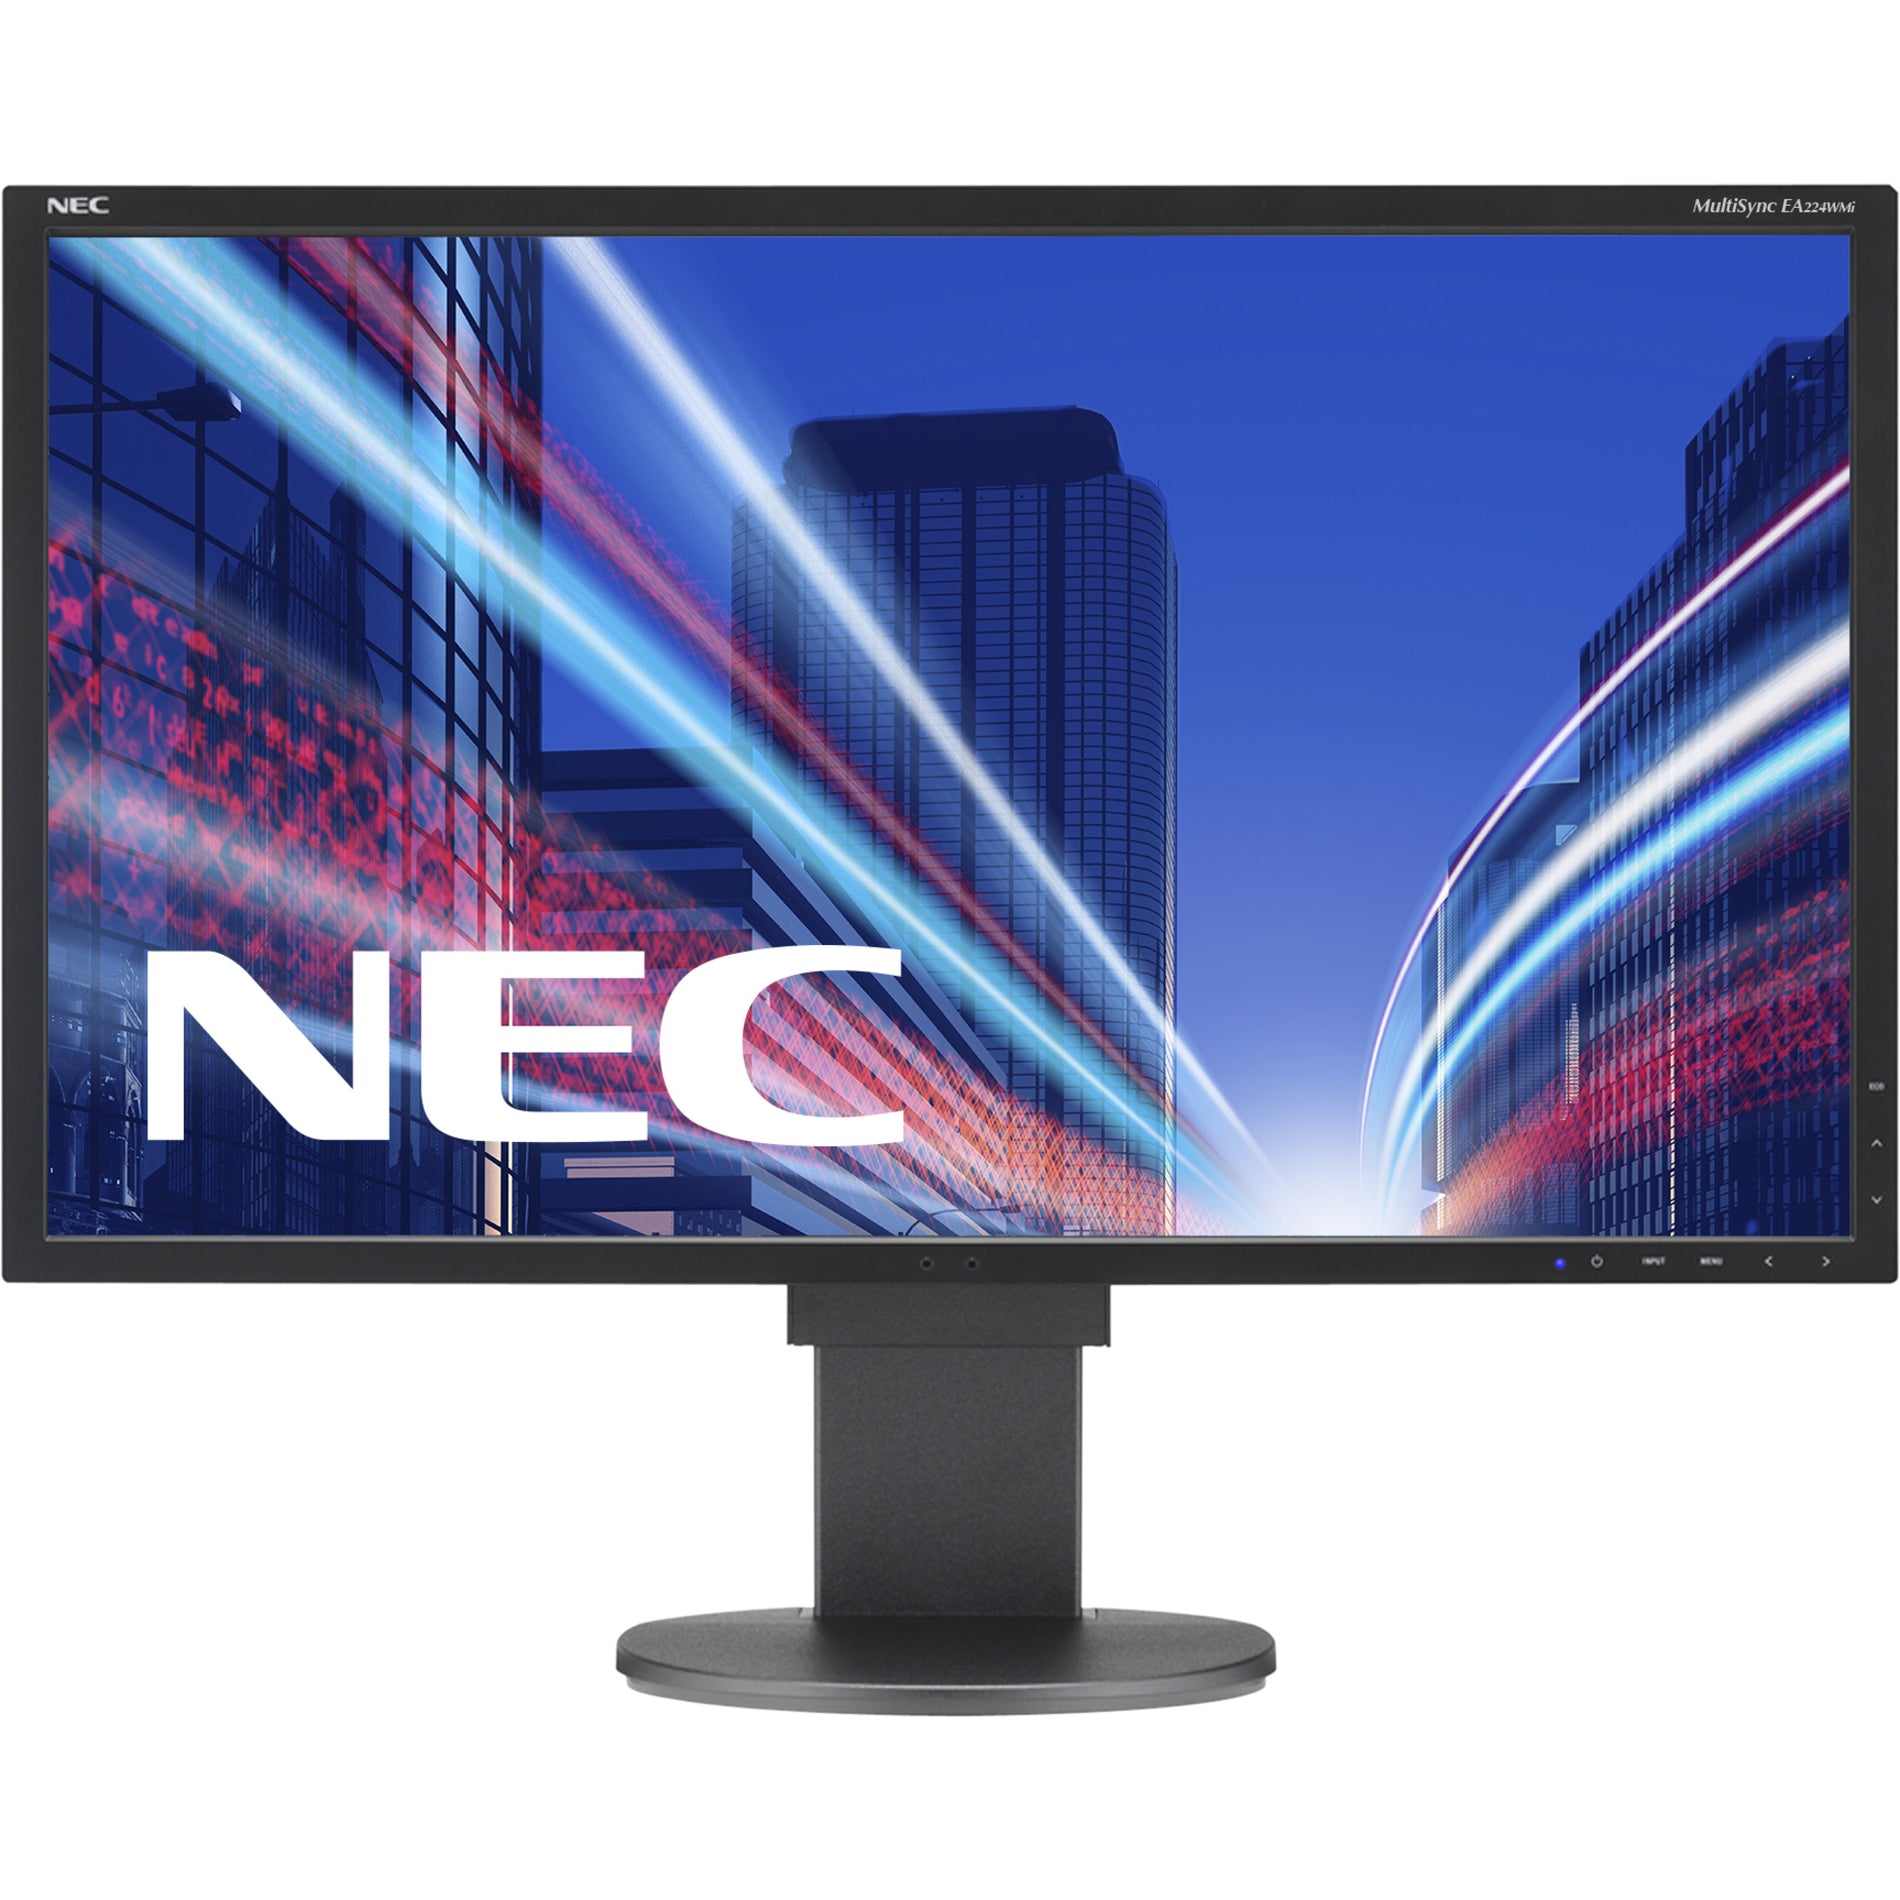 NEC Display EA224WMI-BK 22" LED-backlit Eco-Friendly Widescreen Desktop Monitor, Full HD, IPS Panel, 14ms Response Time, Black